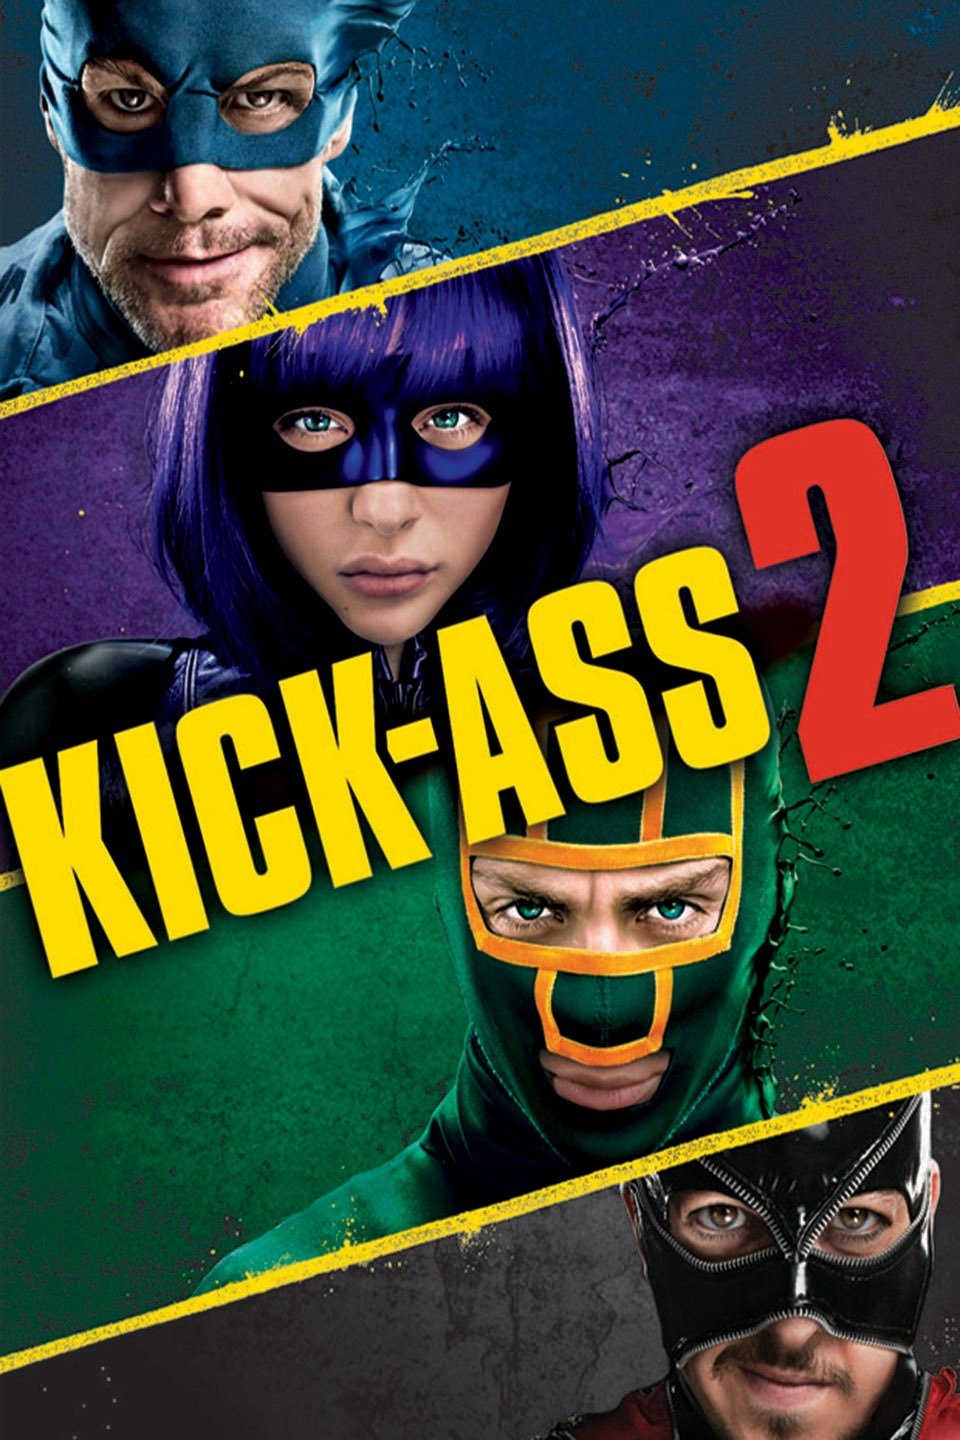 [MINI Super-HQ] Kick-Ass 2 (2013) เกรียนโคตรมหาประลัย ภาค 2 [1080p] [พากย์ไทย DTS + เสียงอังกฤษ DTS] [บรรยายไทย + อังกฤษ] [เสียงไทย + ซับไทย] [OPENLOAD]